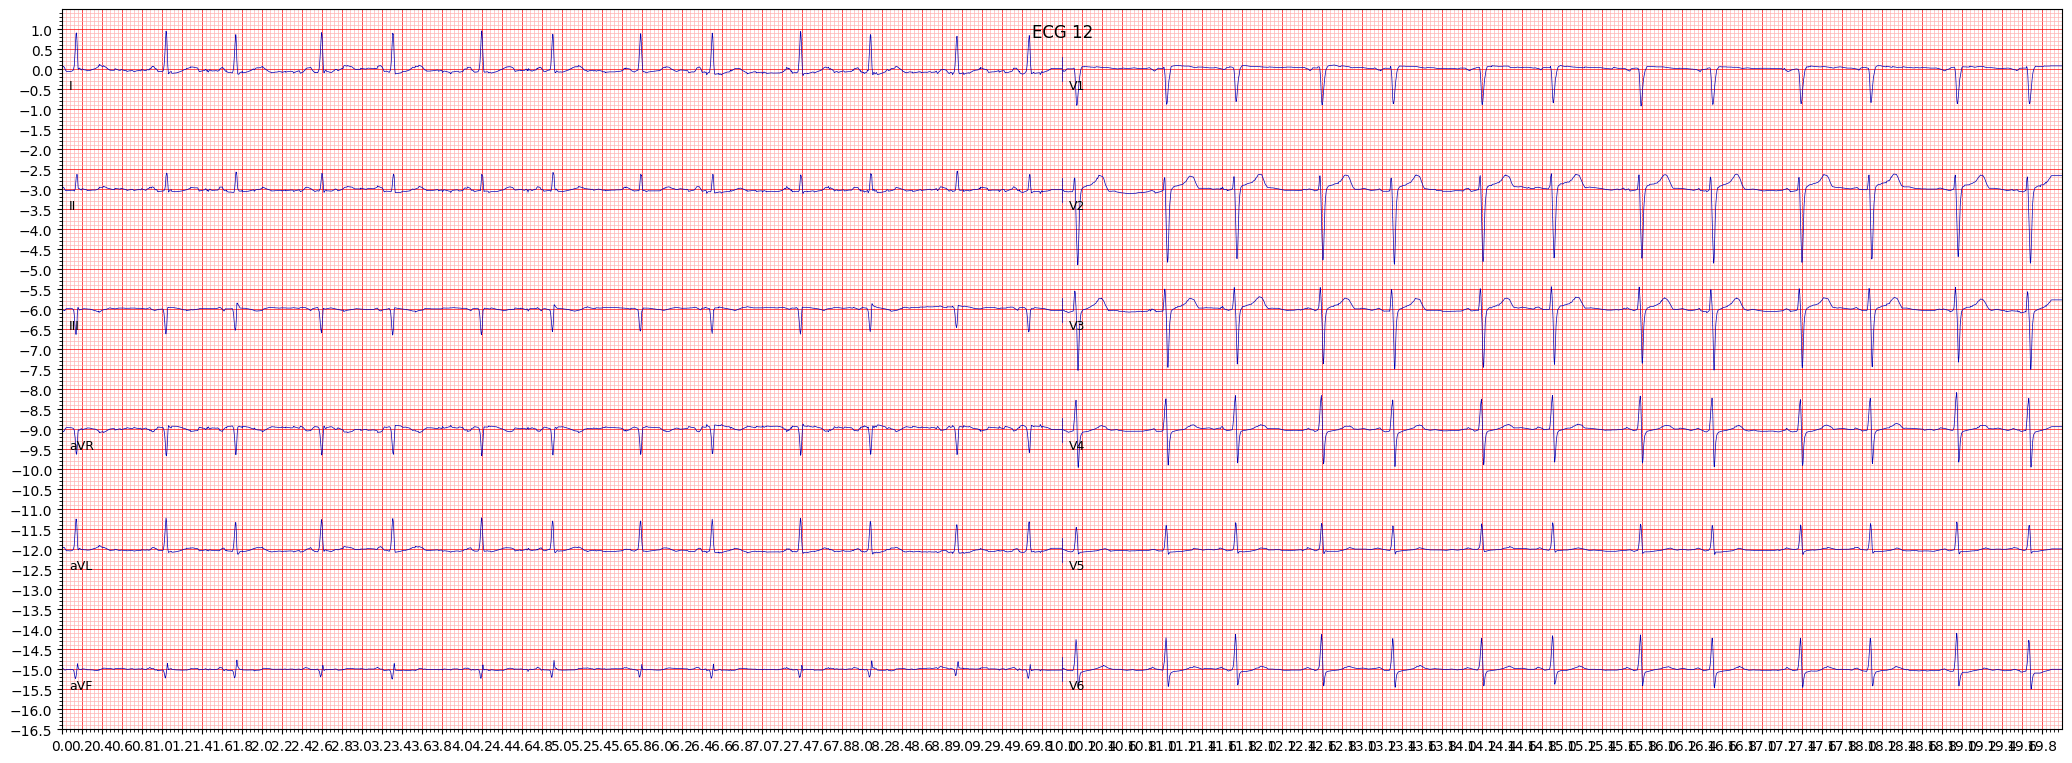 inferior myocardial infarction (IMI) example 1747